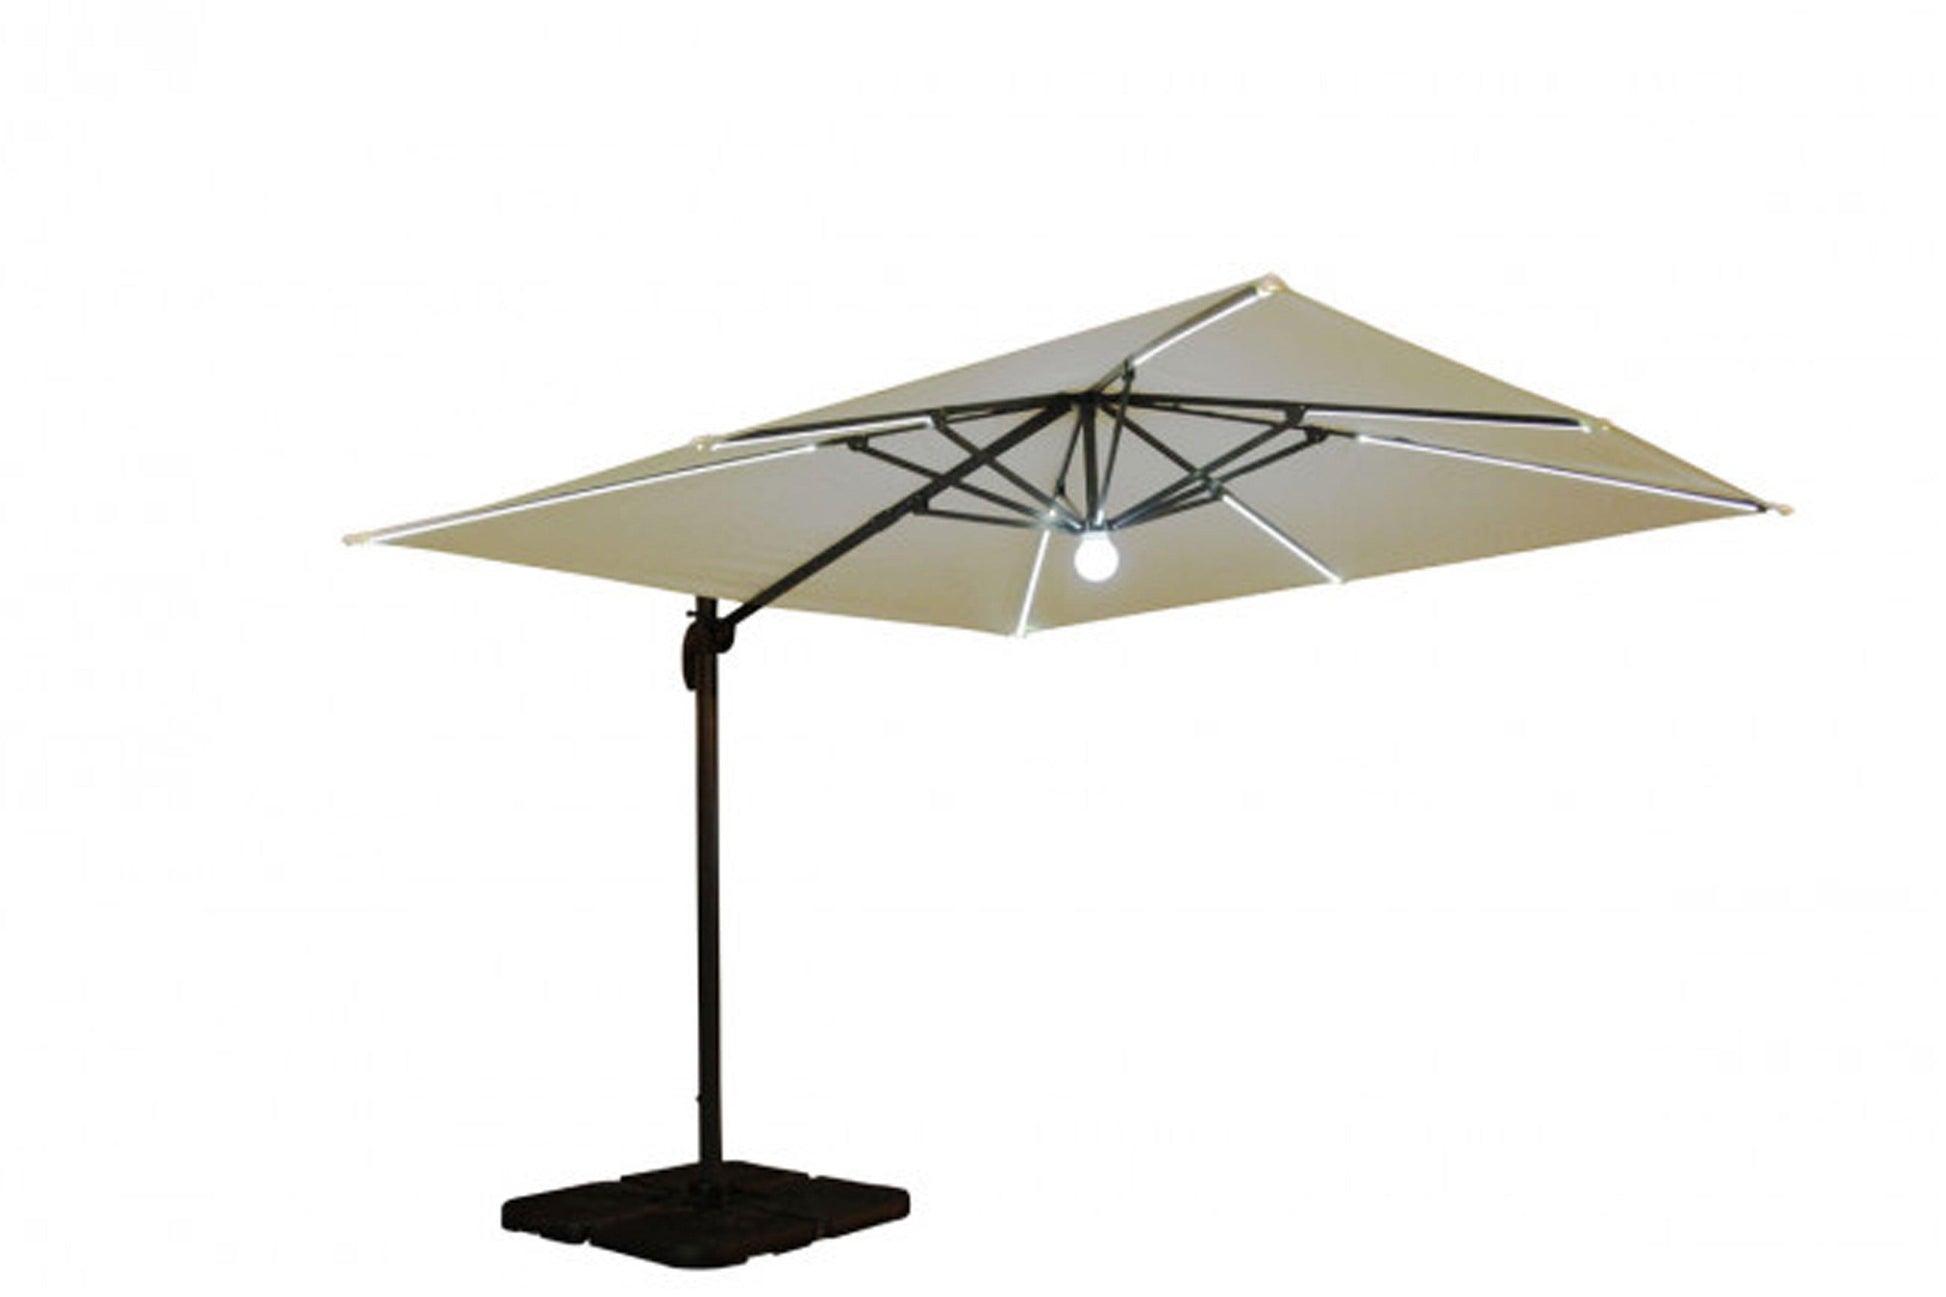 Panama Jack 11.5 FT Square LED Cantilever Umbrella with 105 lb. base - Venini Furniture 